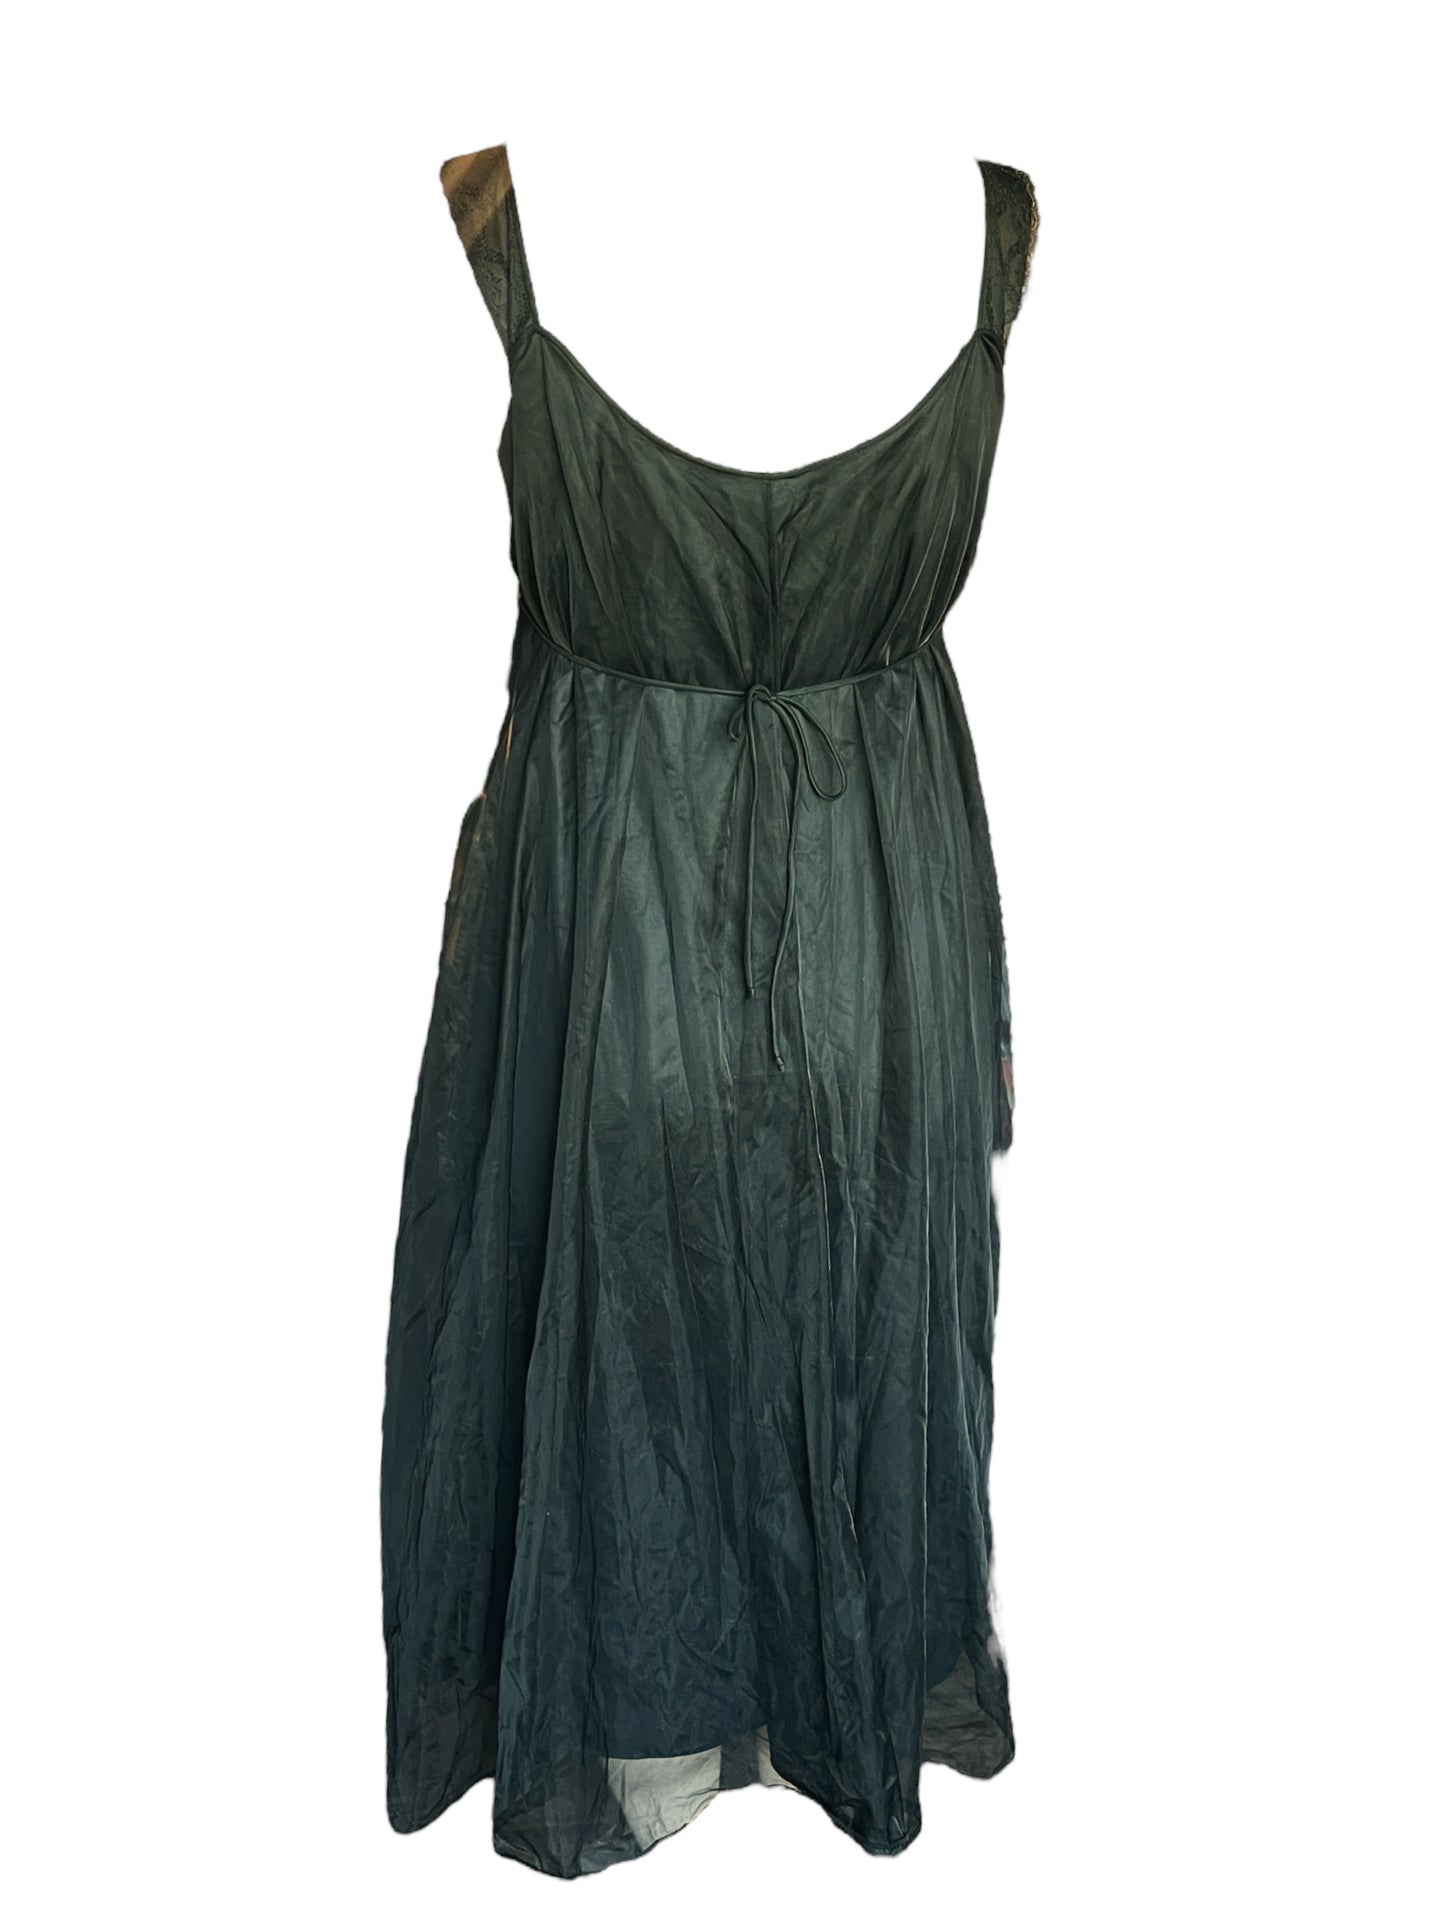 Vintage 2-piece Black Dress + Robe - L